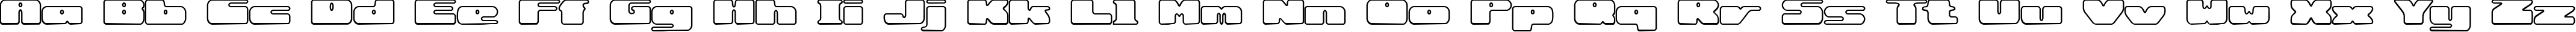 Пример написания английского алфавита шрифтом Rotund Outline BRK